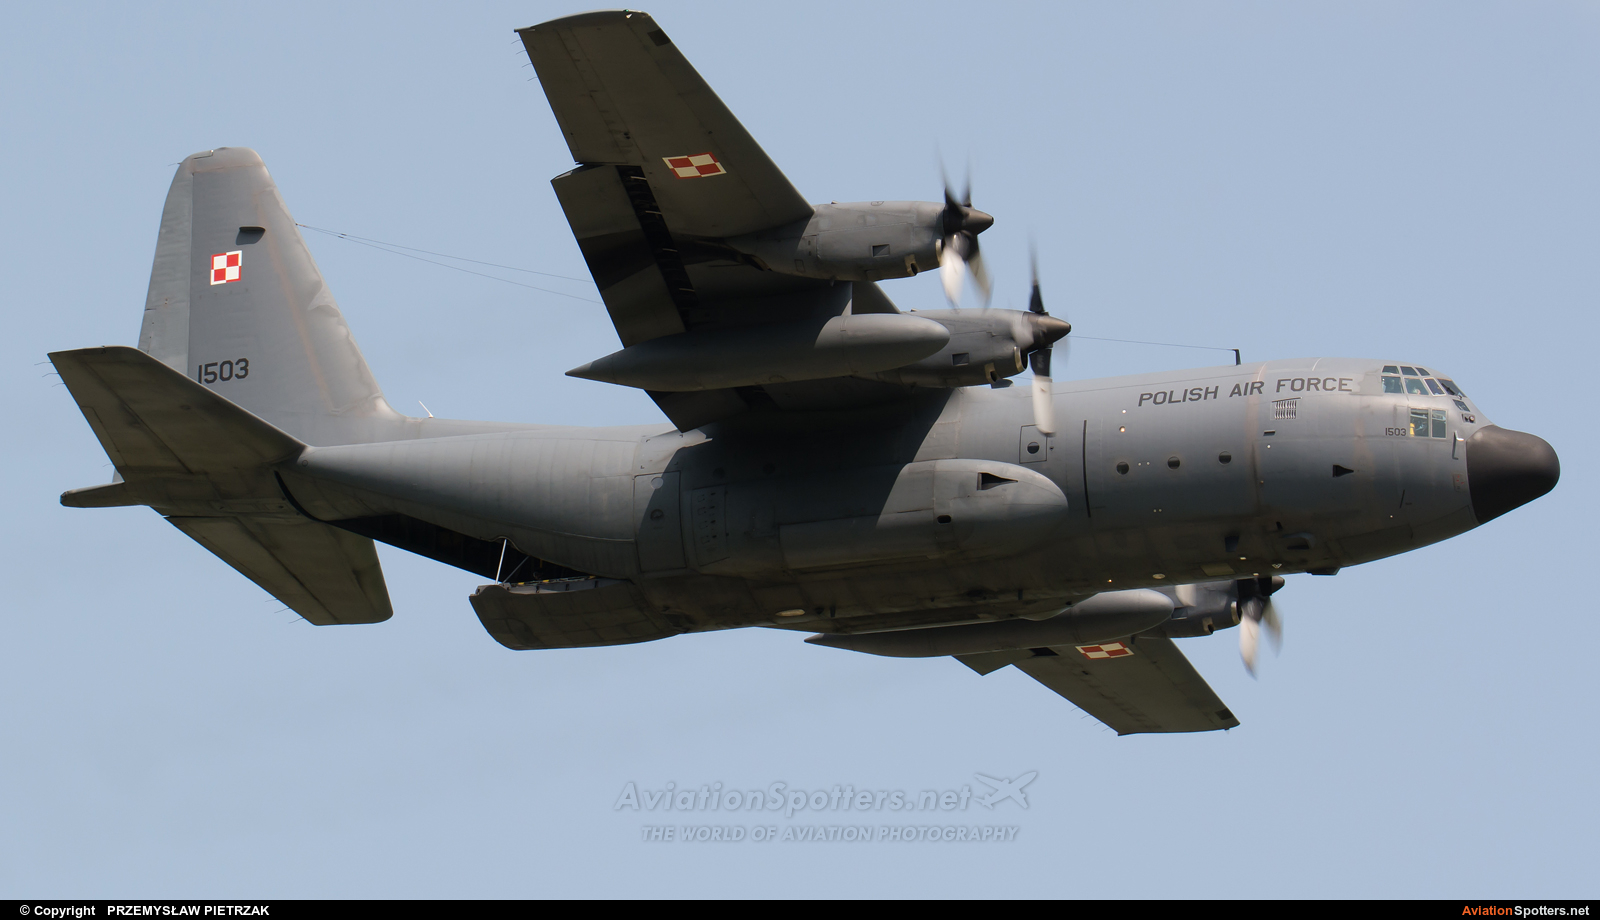 Poland - Air Force  -  C-130E Hercules  (1503) By PRZEMYSŁAW PIETRZAK (PEPE74)